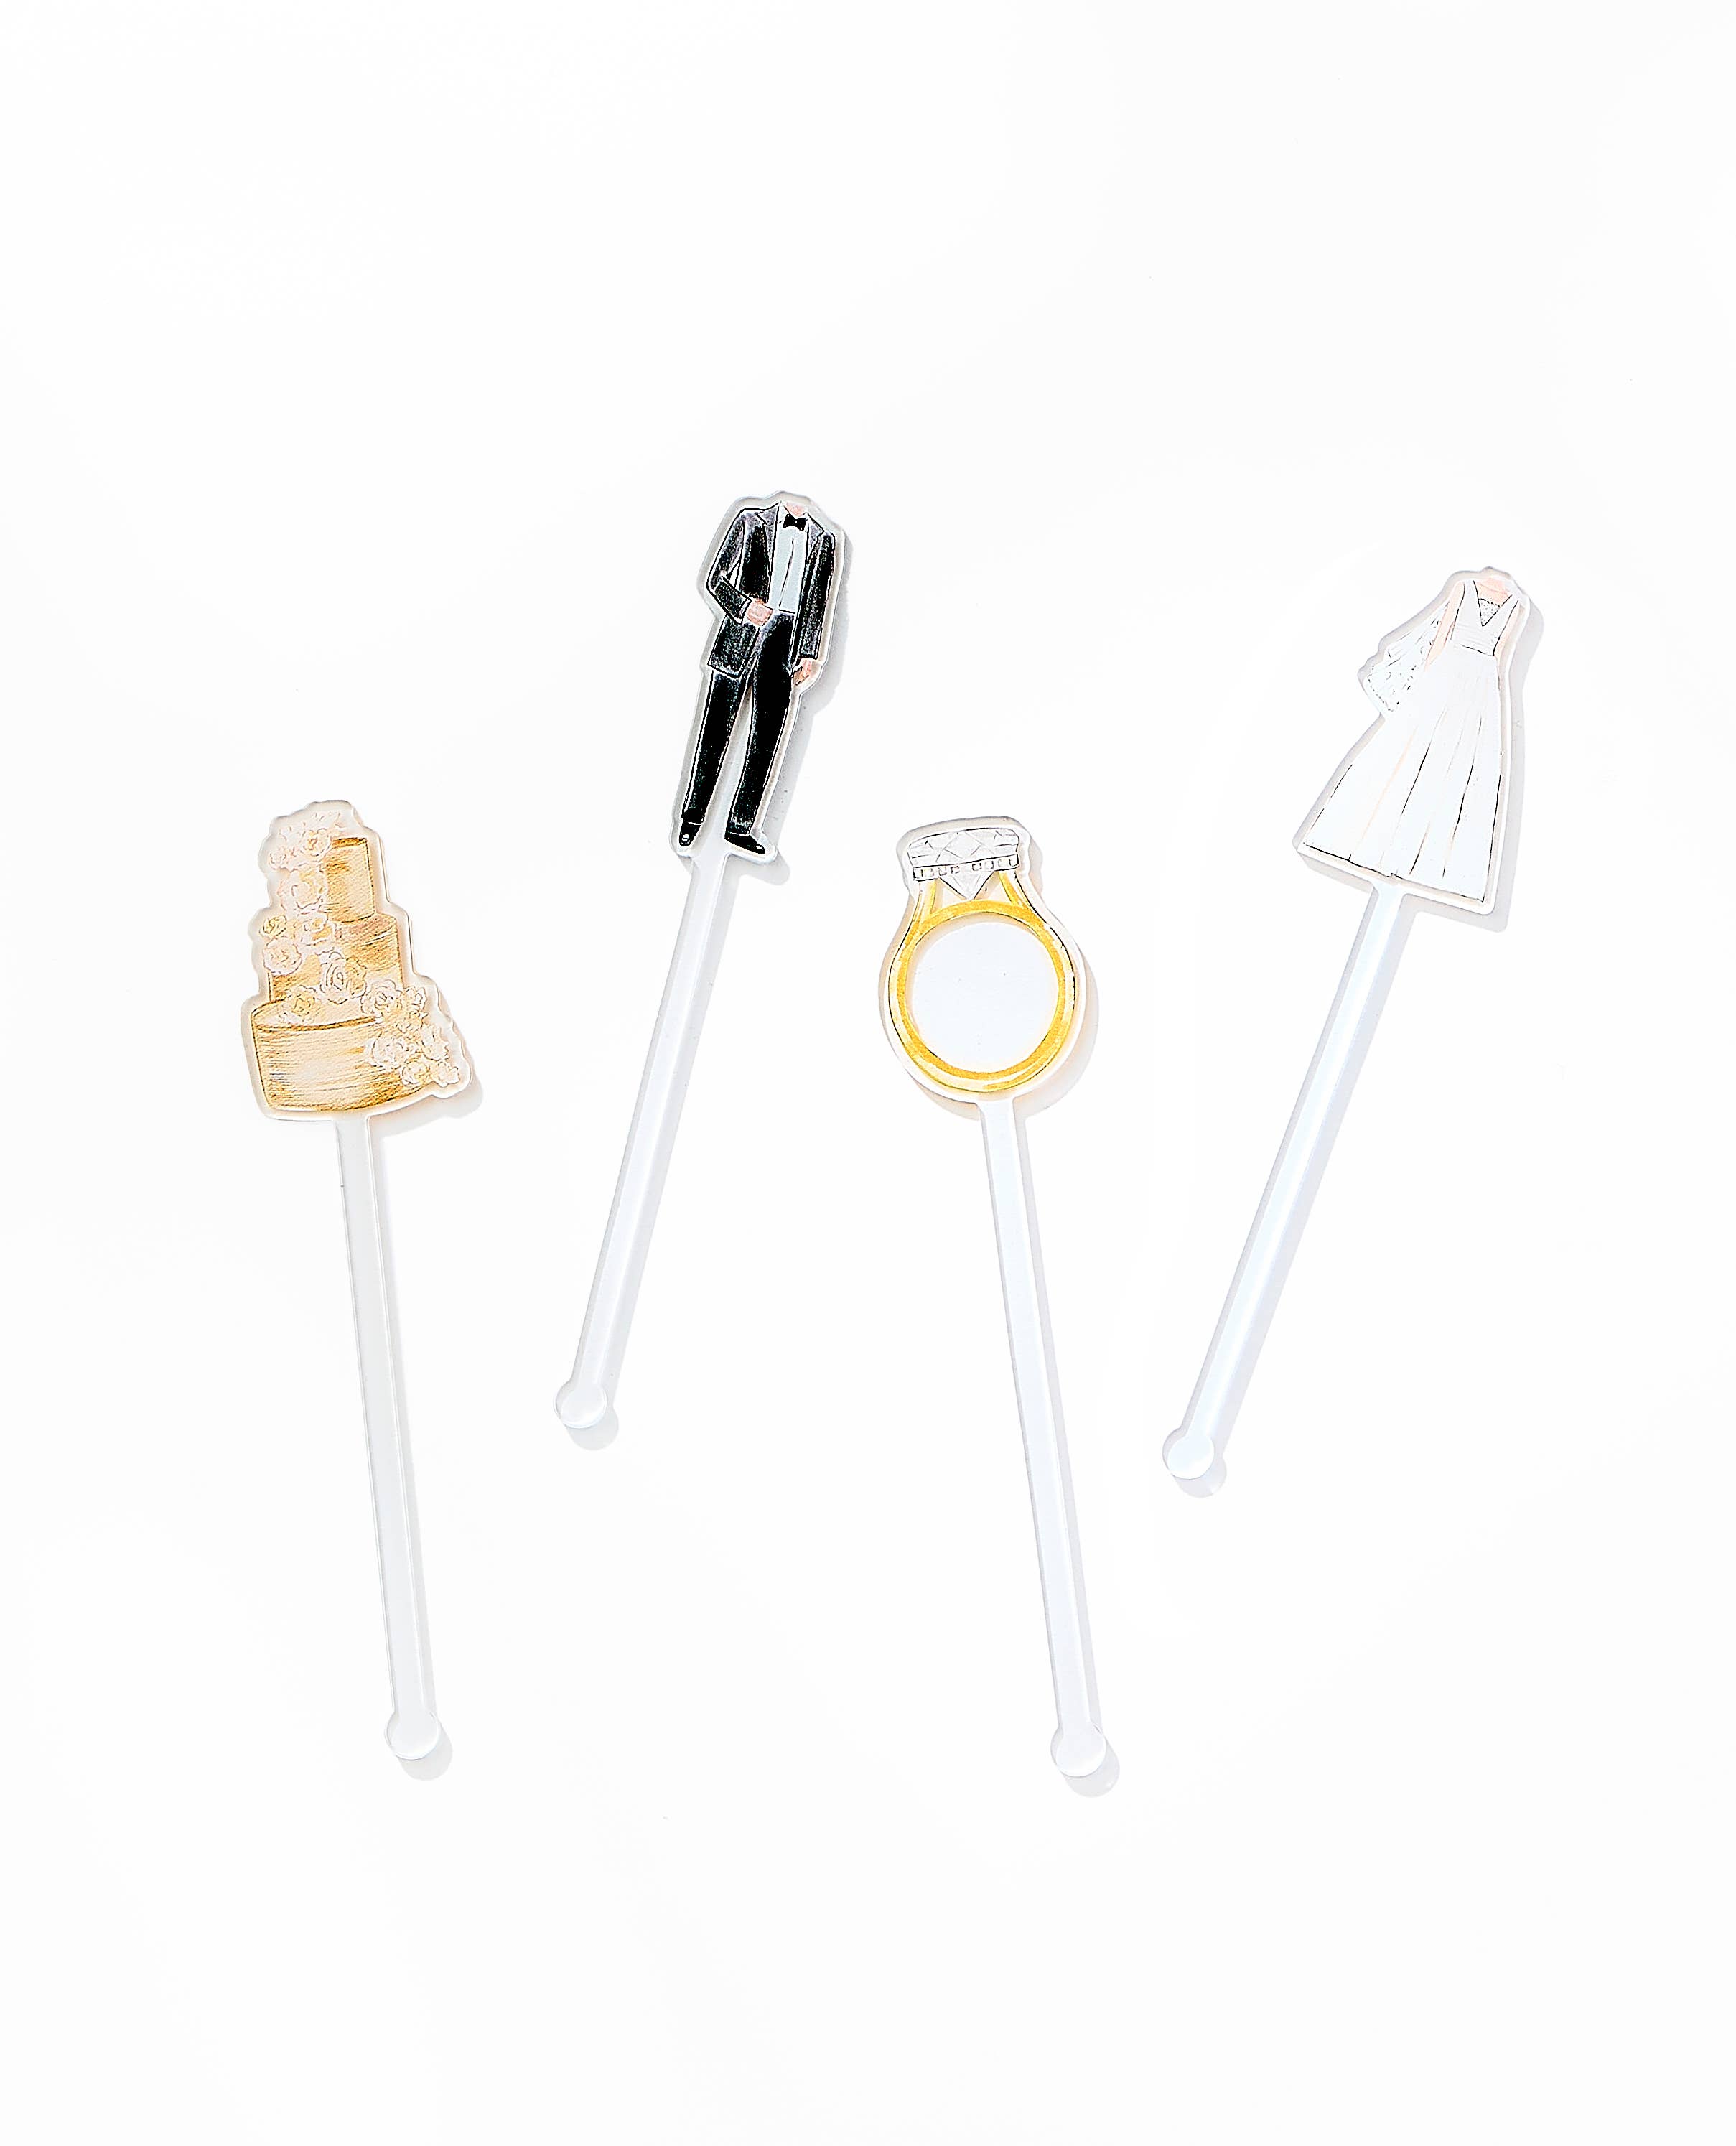 Wedding Icons - Acrylic Stir Sticks